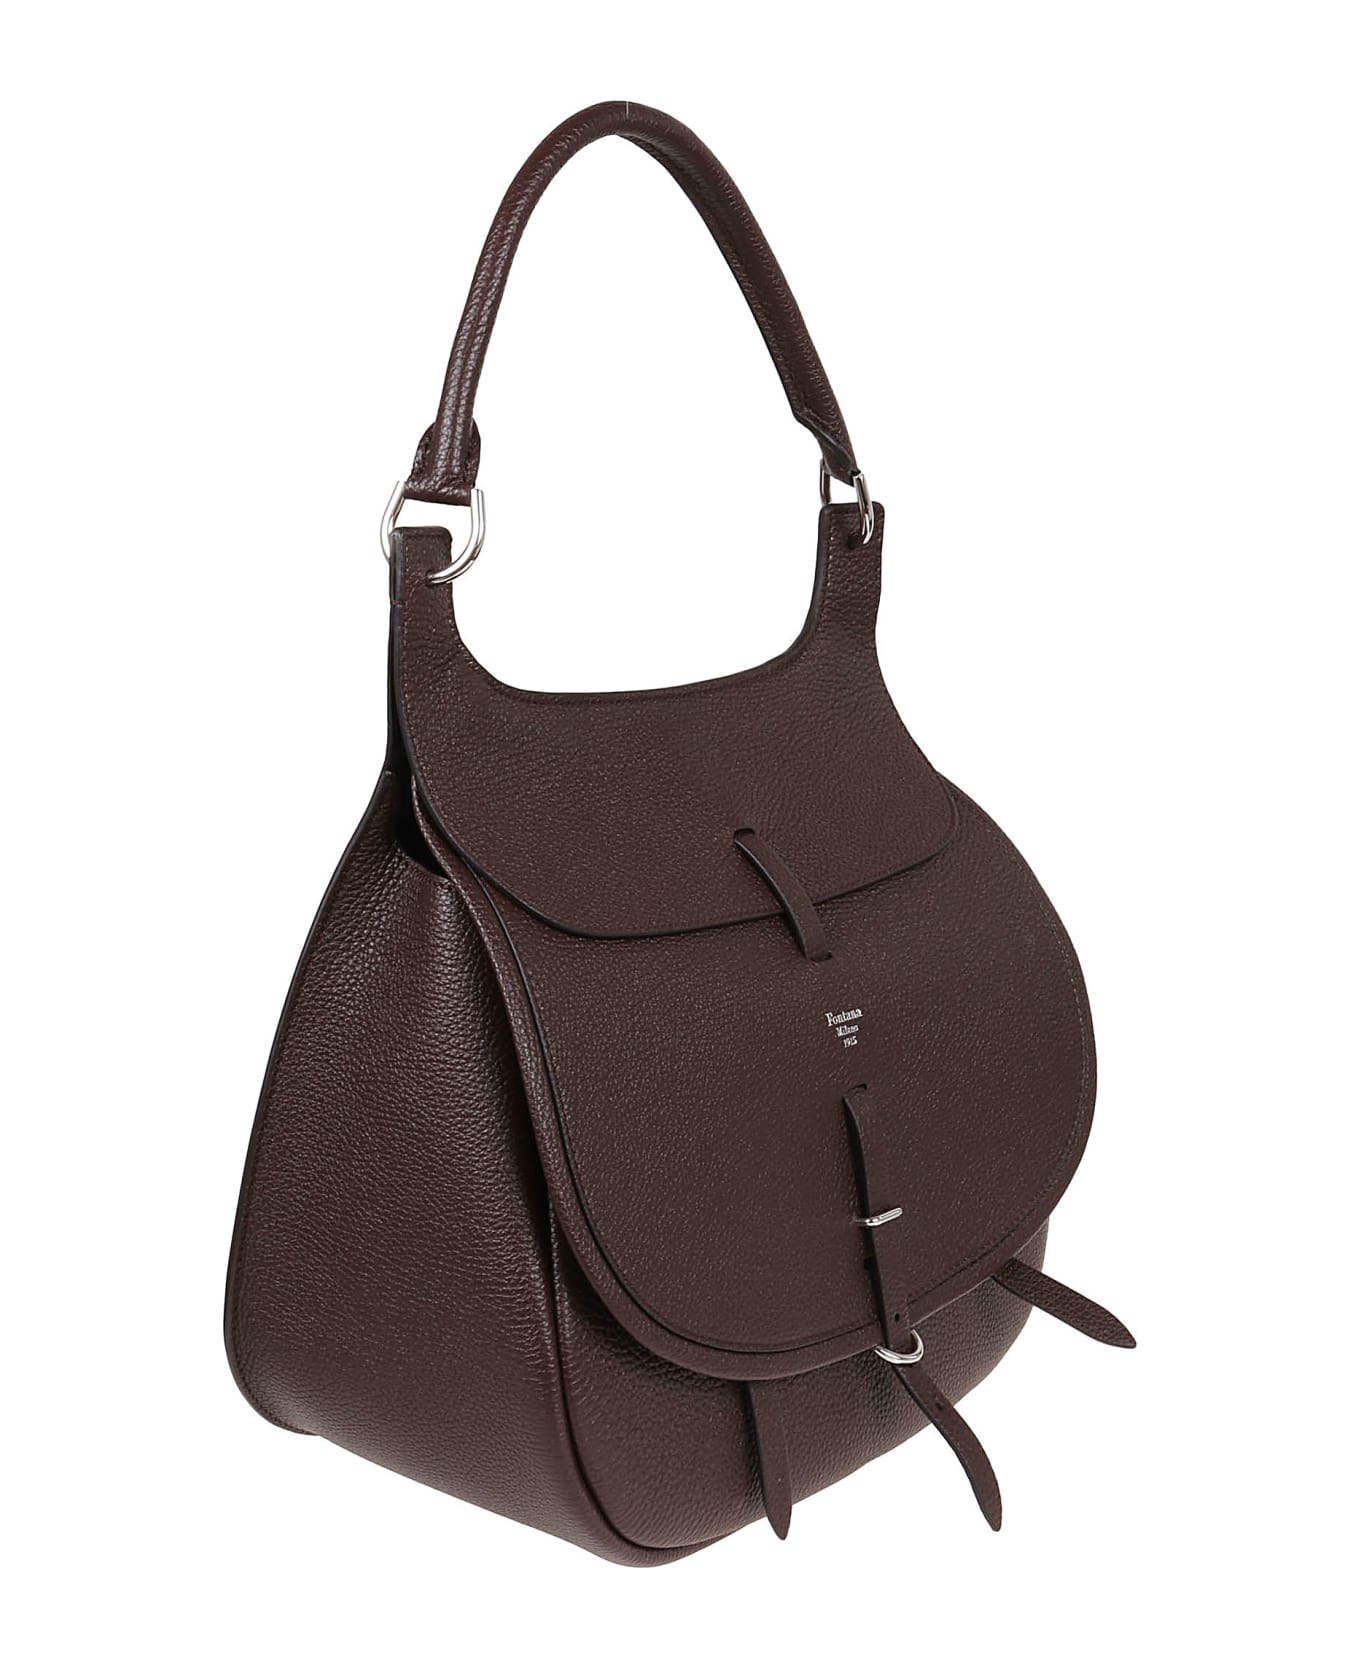 Fontana Couture Leather Bag - Mahogany